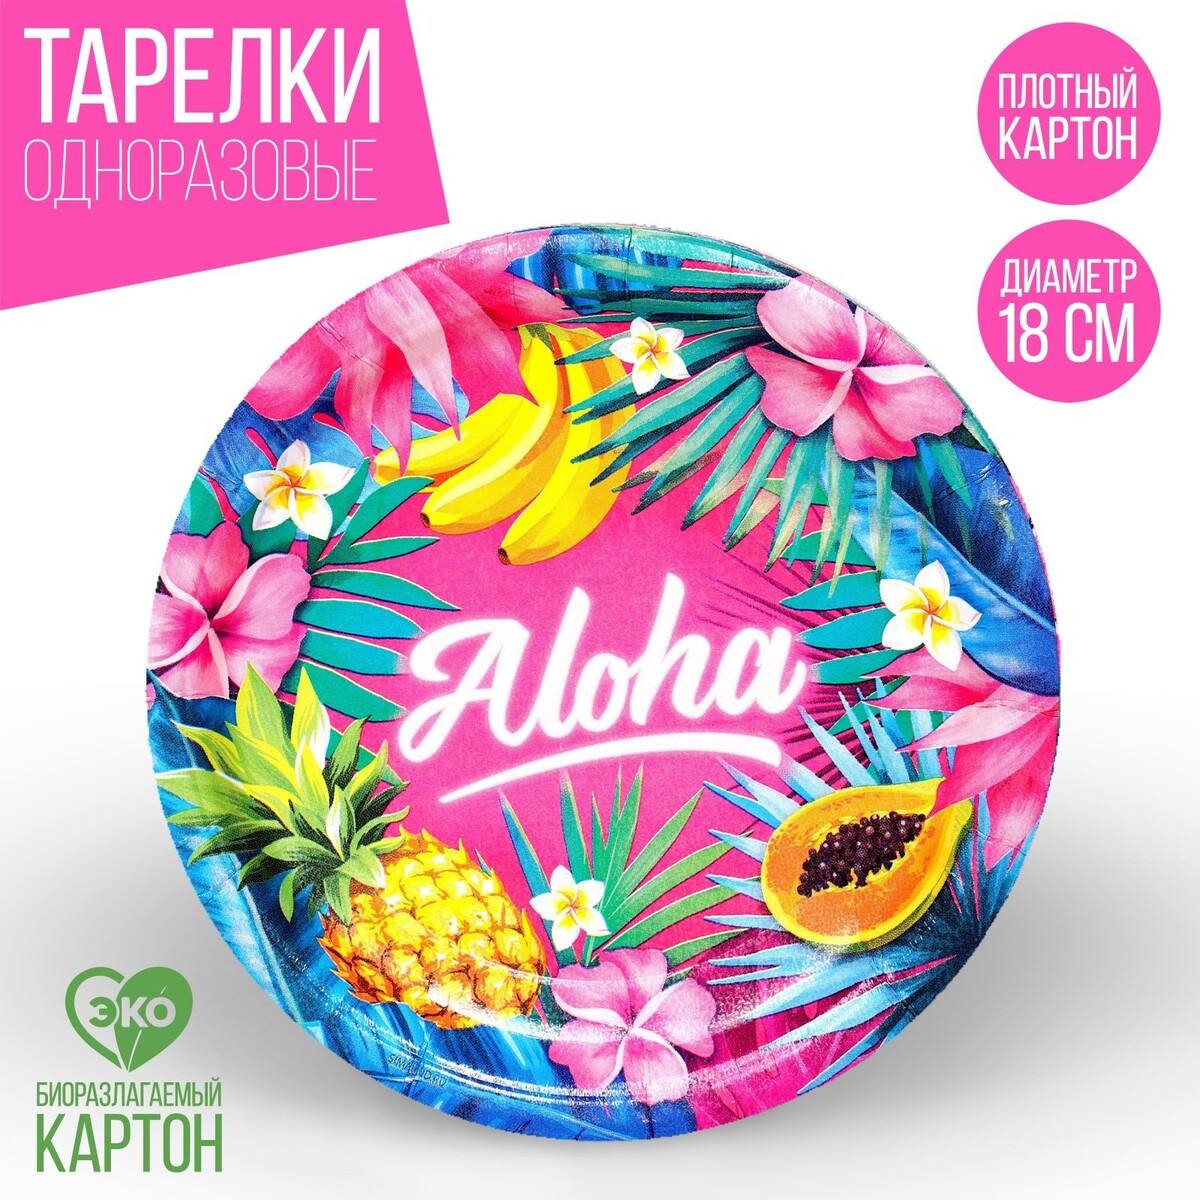 Тарелка одноразовая бумажная aloha, набор 6 шт, 18 см